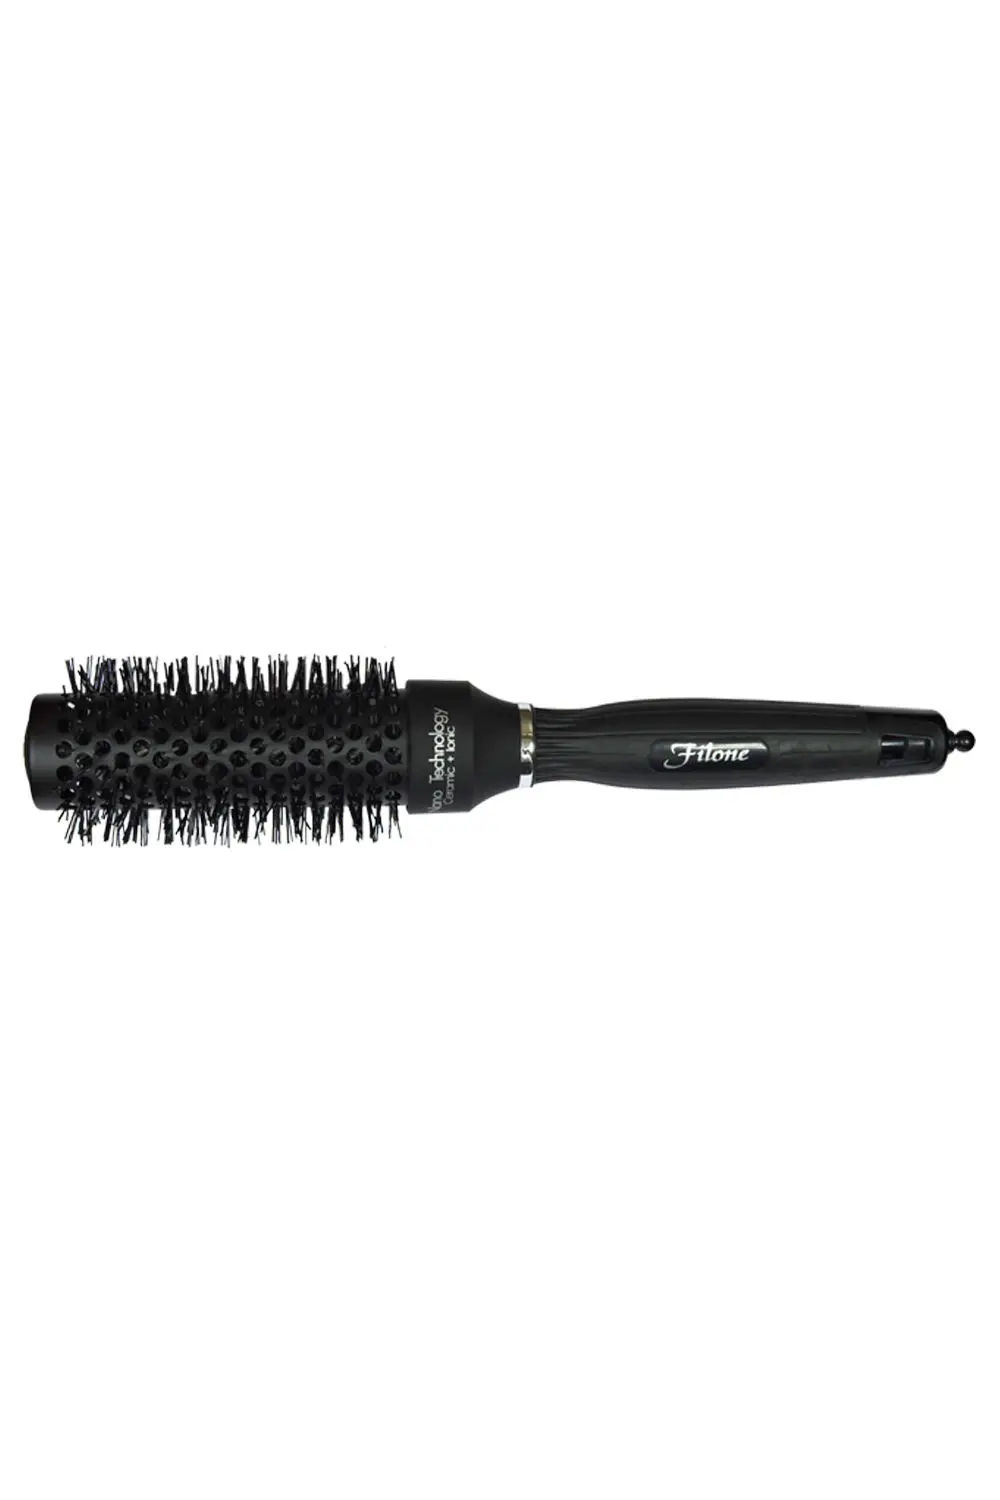 Filone Professional Hot Curl Brush - 9516c